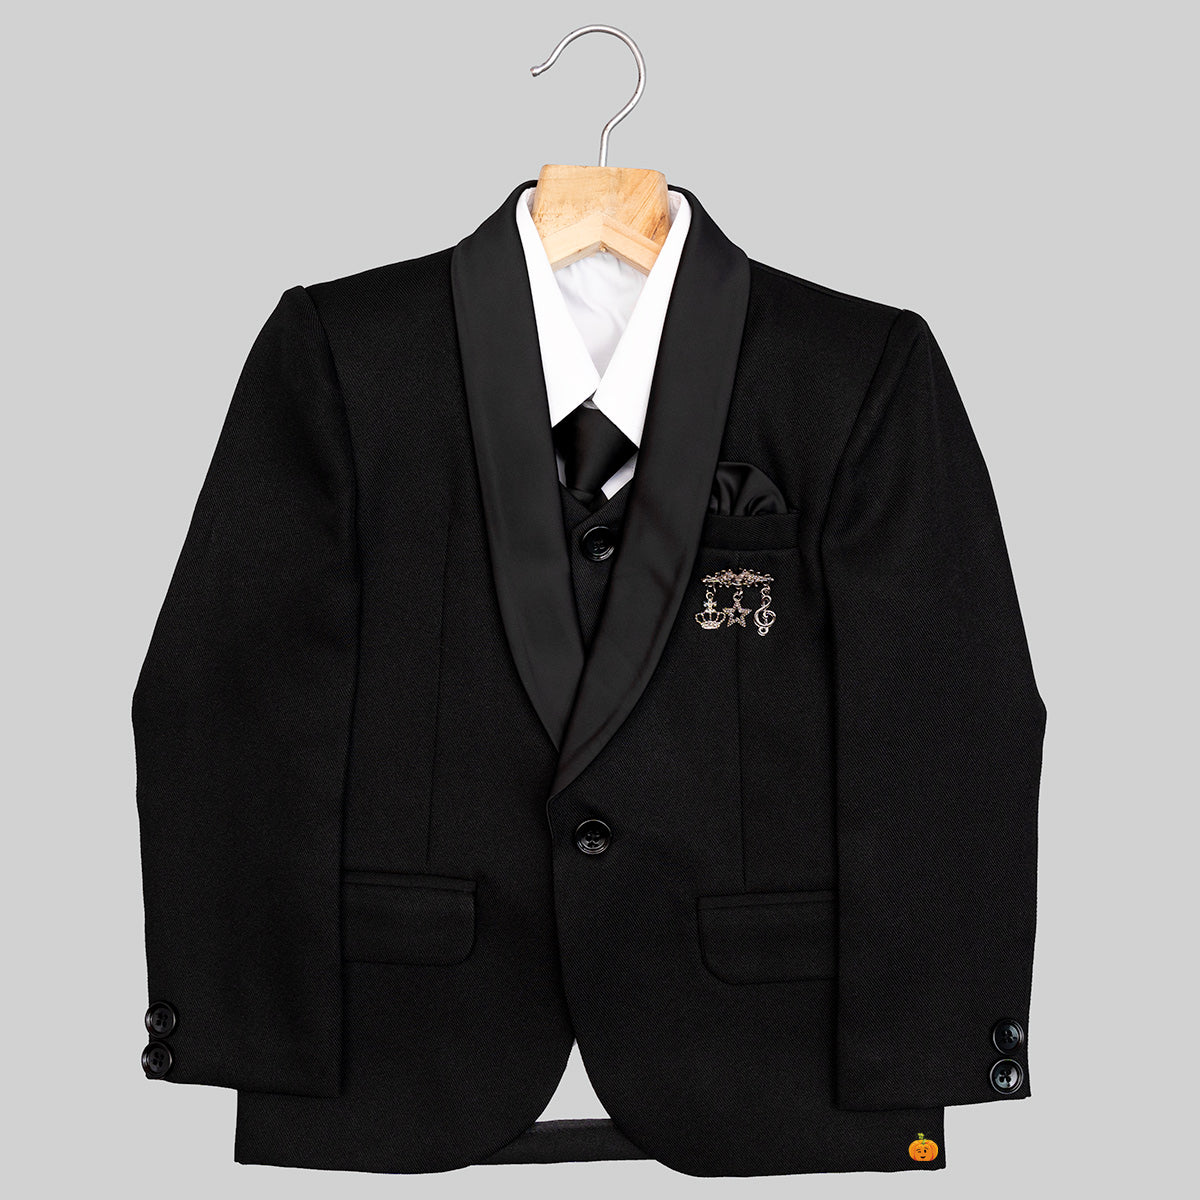 Zara Boys Suit Jacket Size 10 (140 cm) Kids | eBay